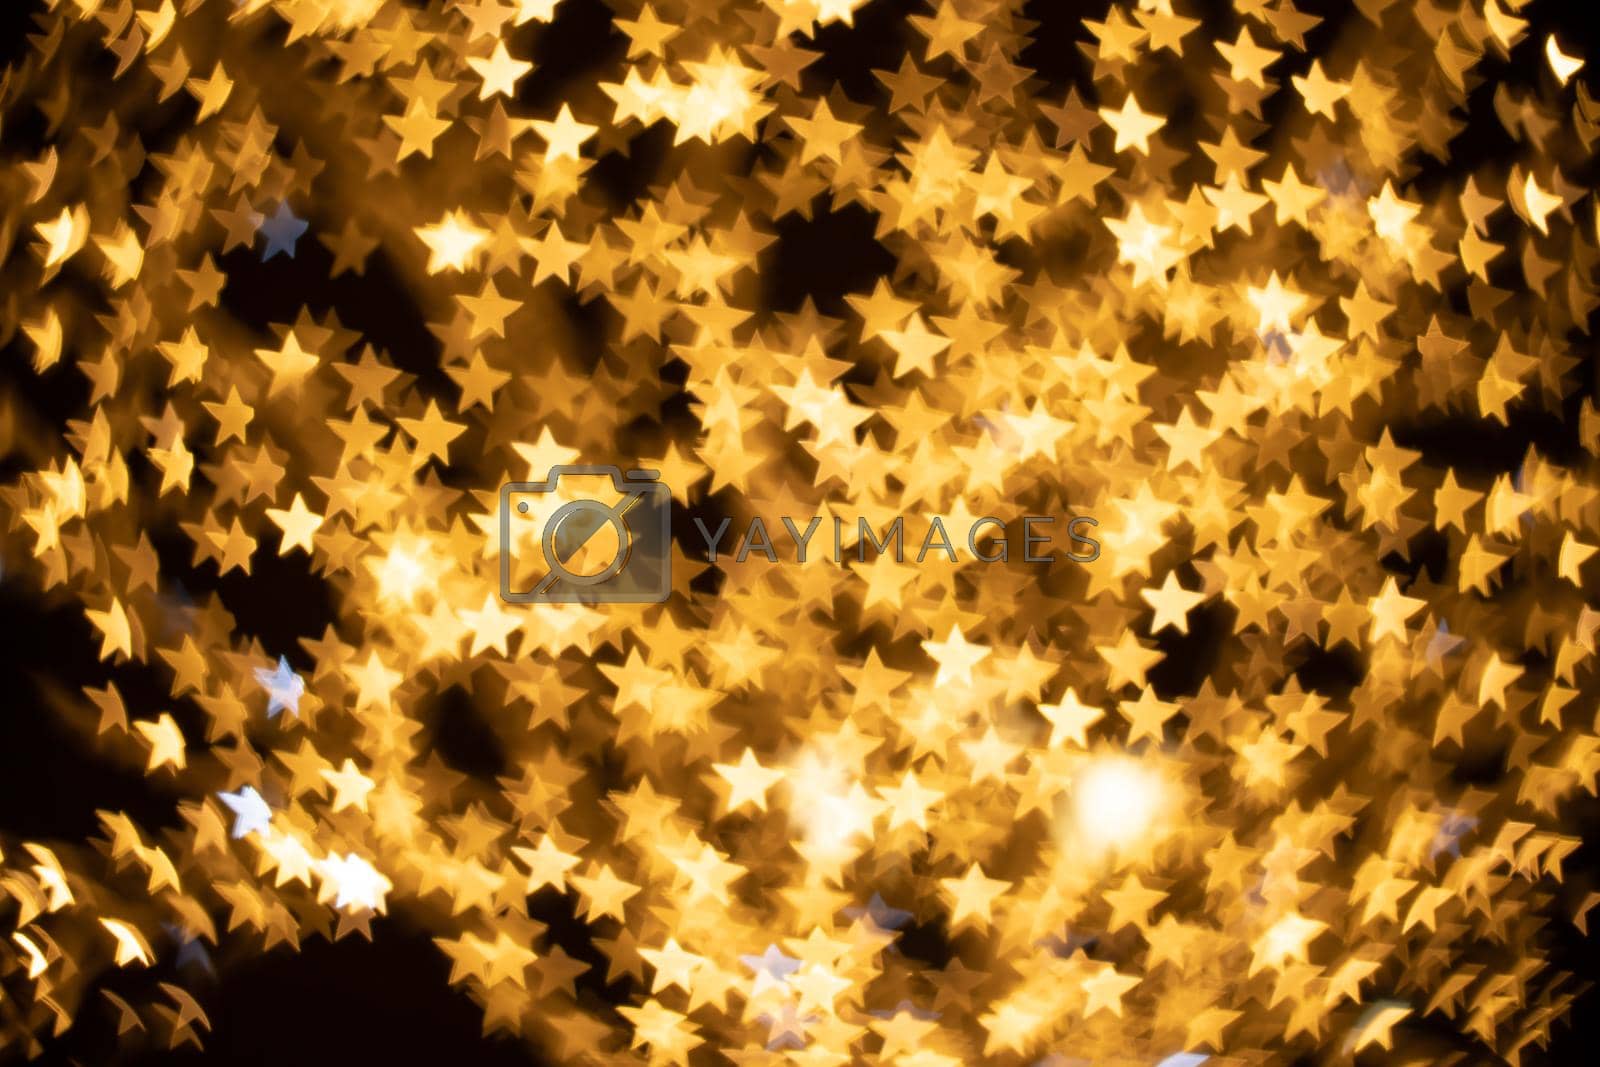 Royalty free image of Christmas ilumination bokeh gights in the city by Matiunina